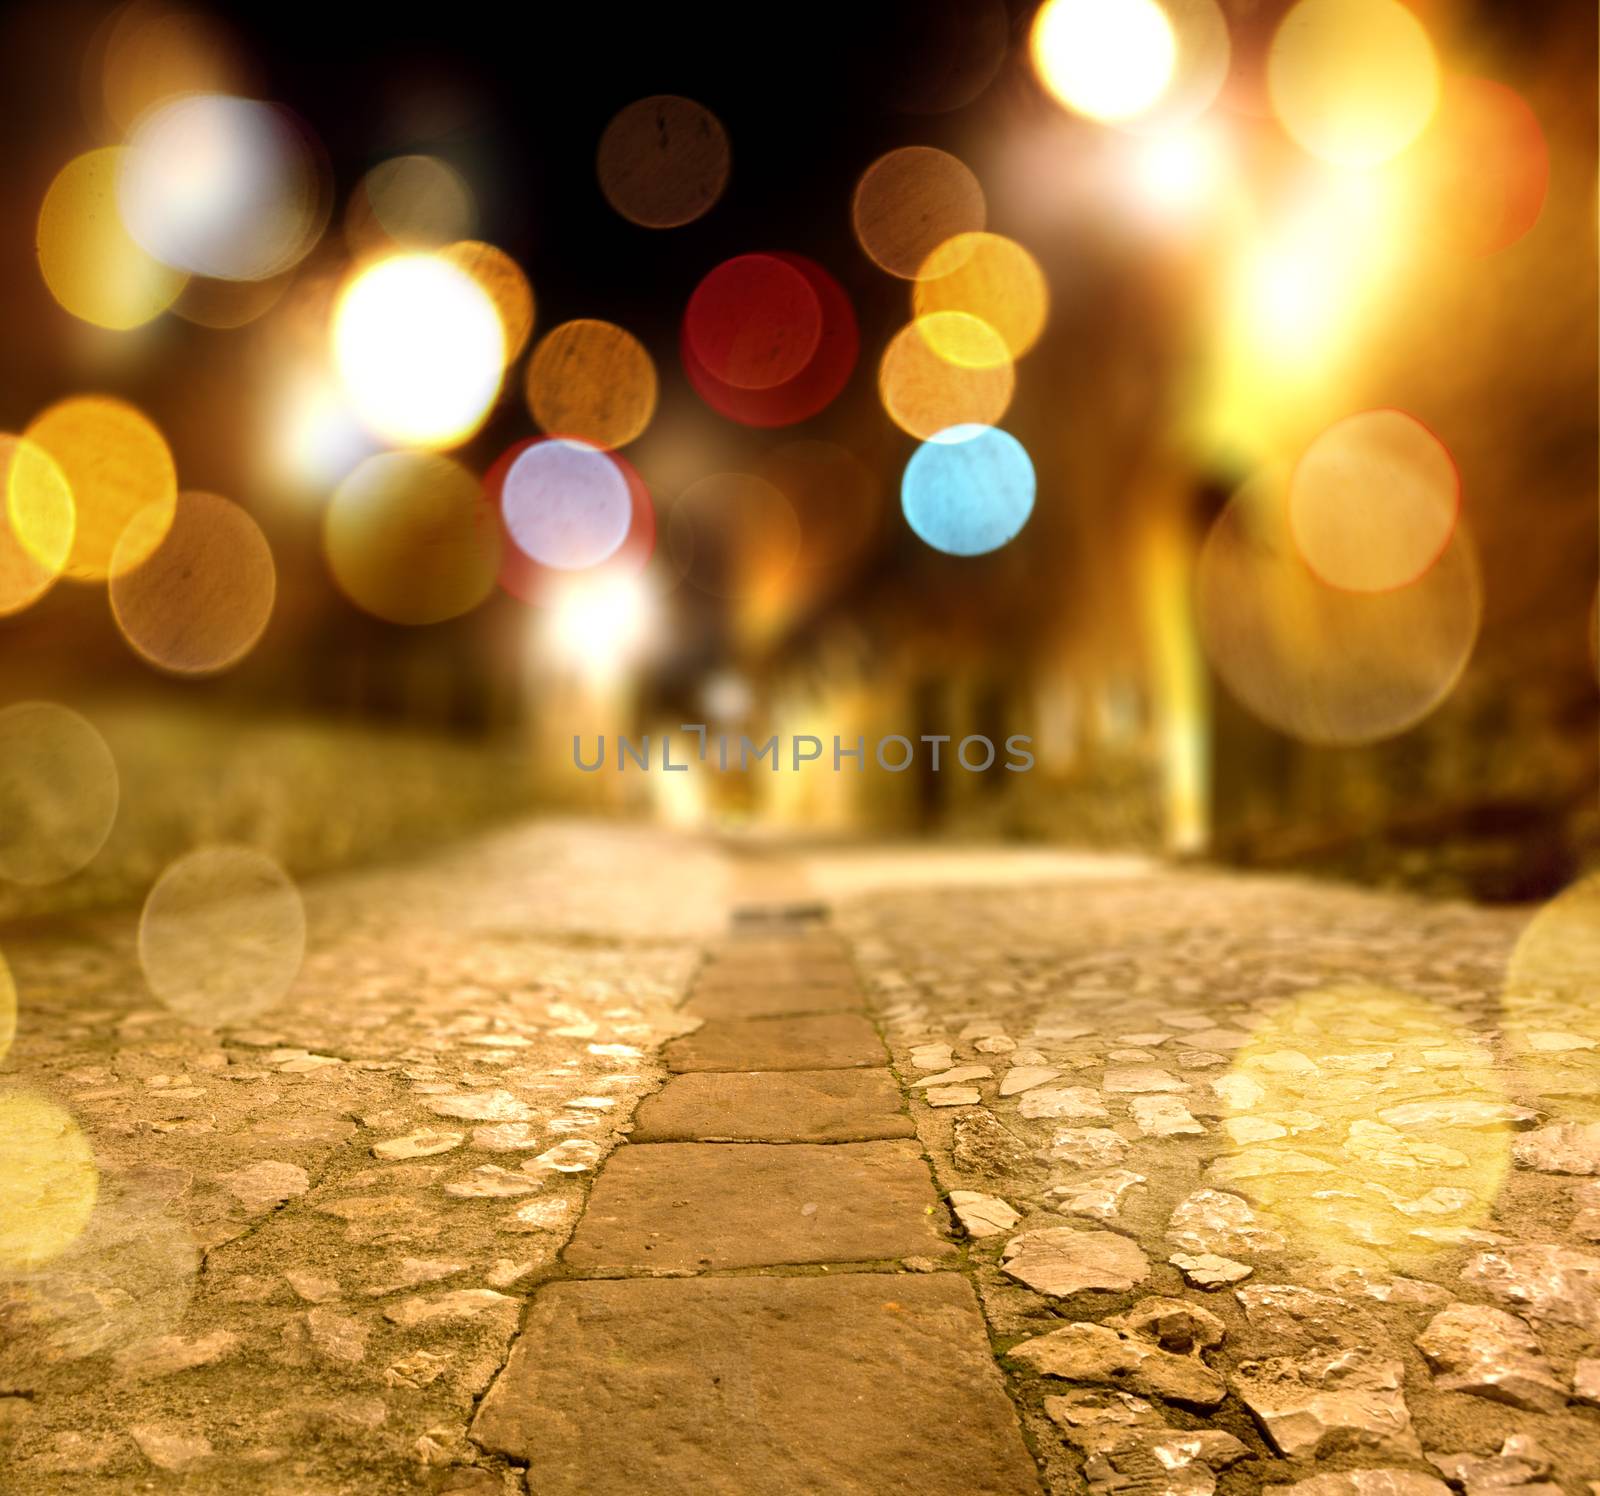 Abstract stone floor at night scenery by carloscastilla